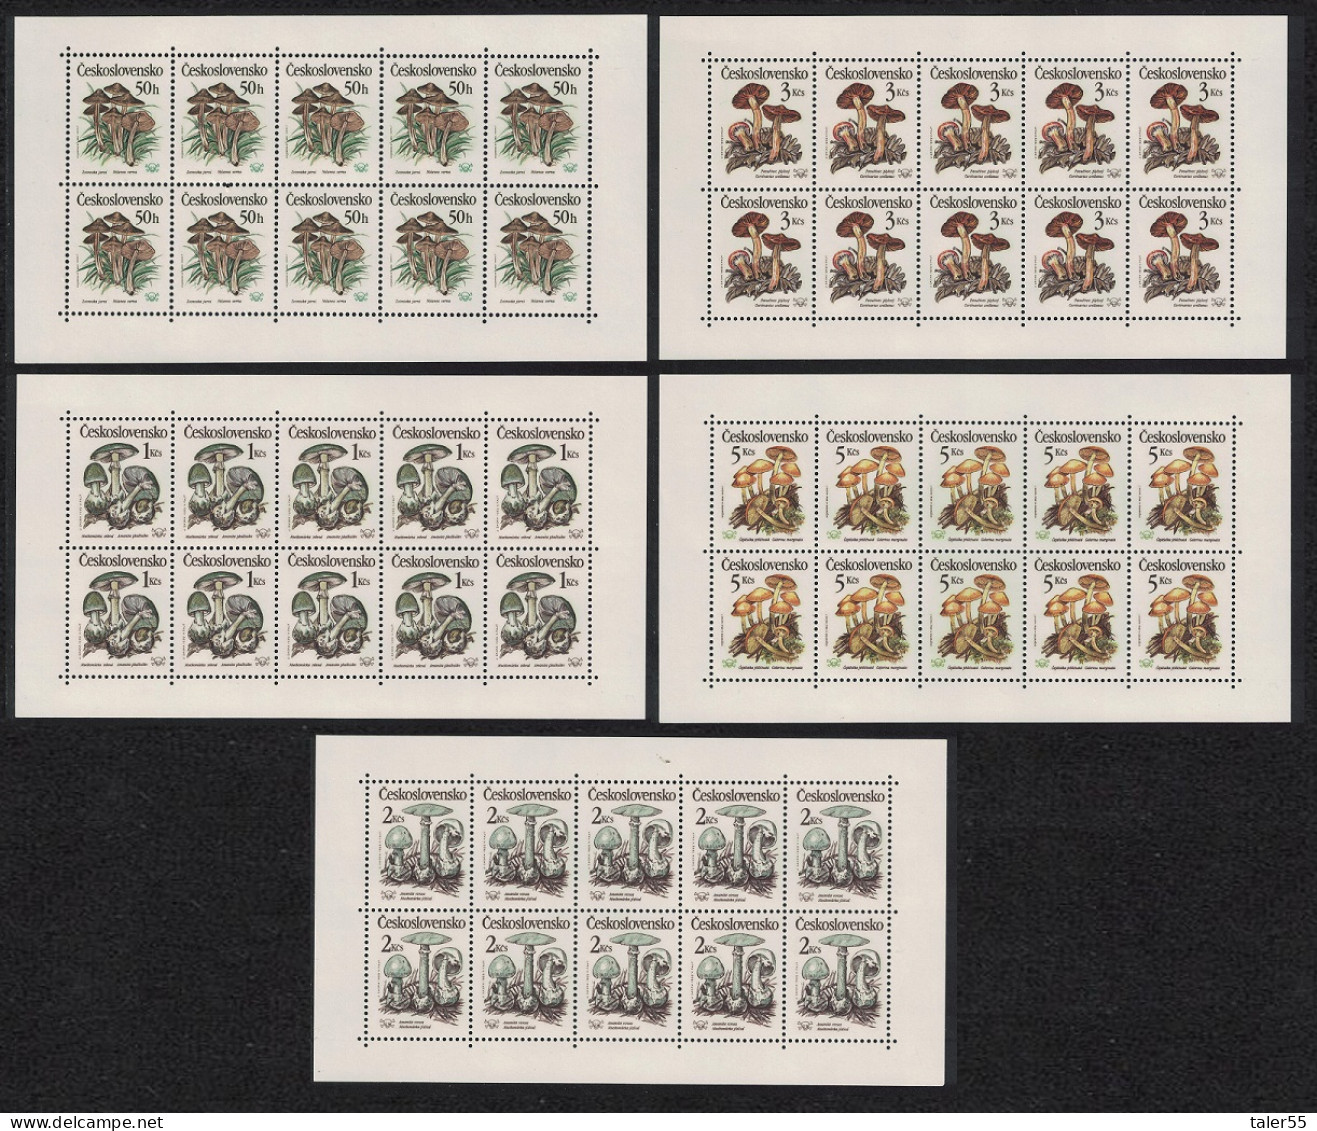 Czechoslovakia Poisonous Fungi 5 Sheetlets 1989 MNH SG#2992-2996 - Unused Stamps